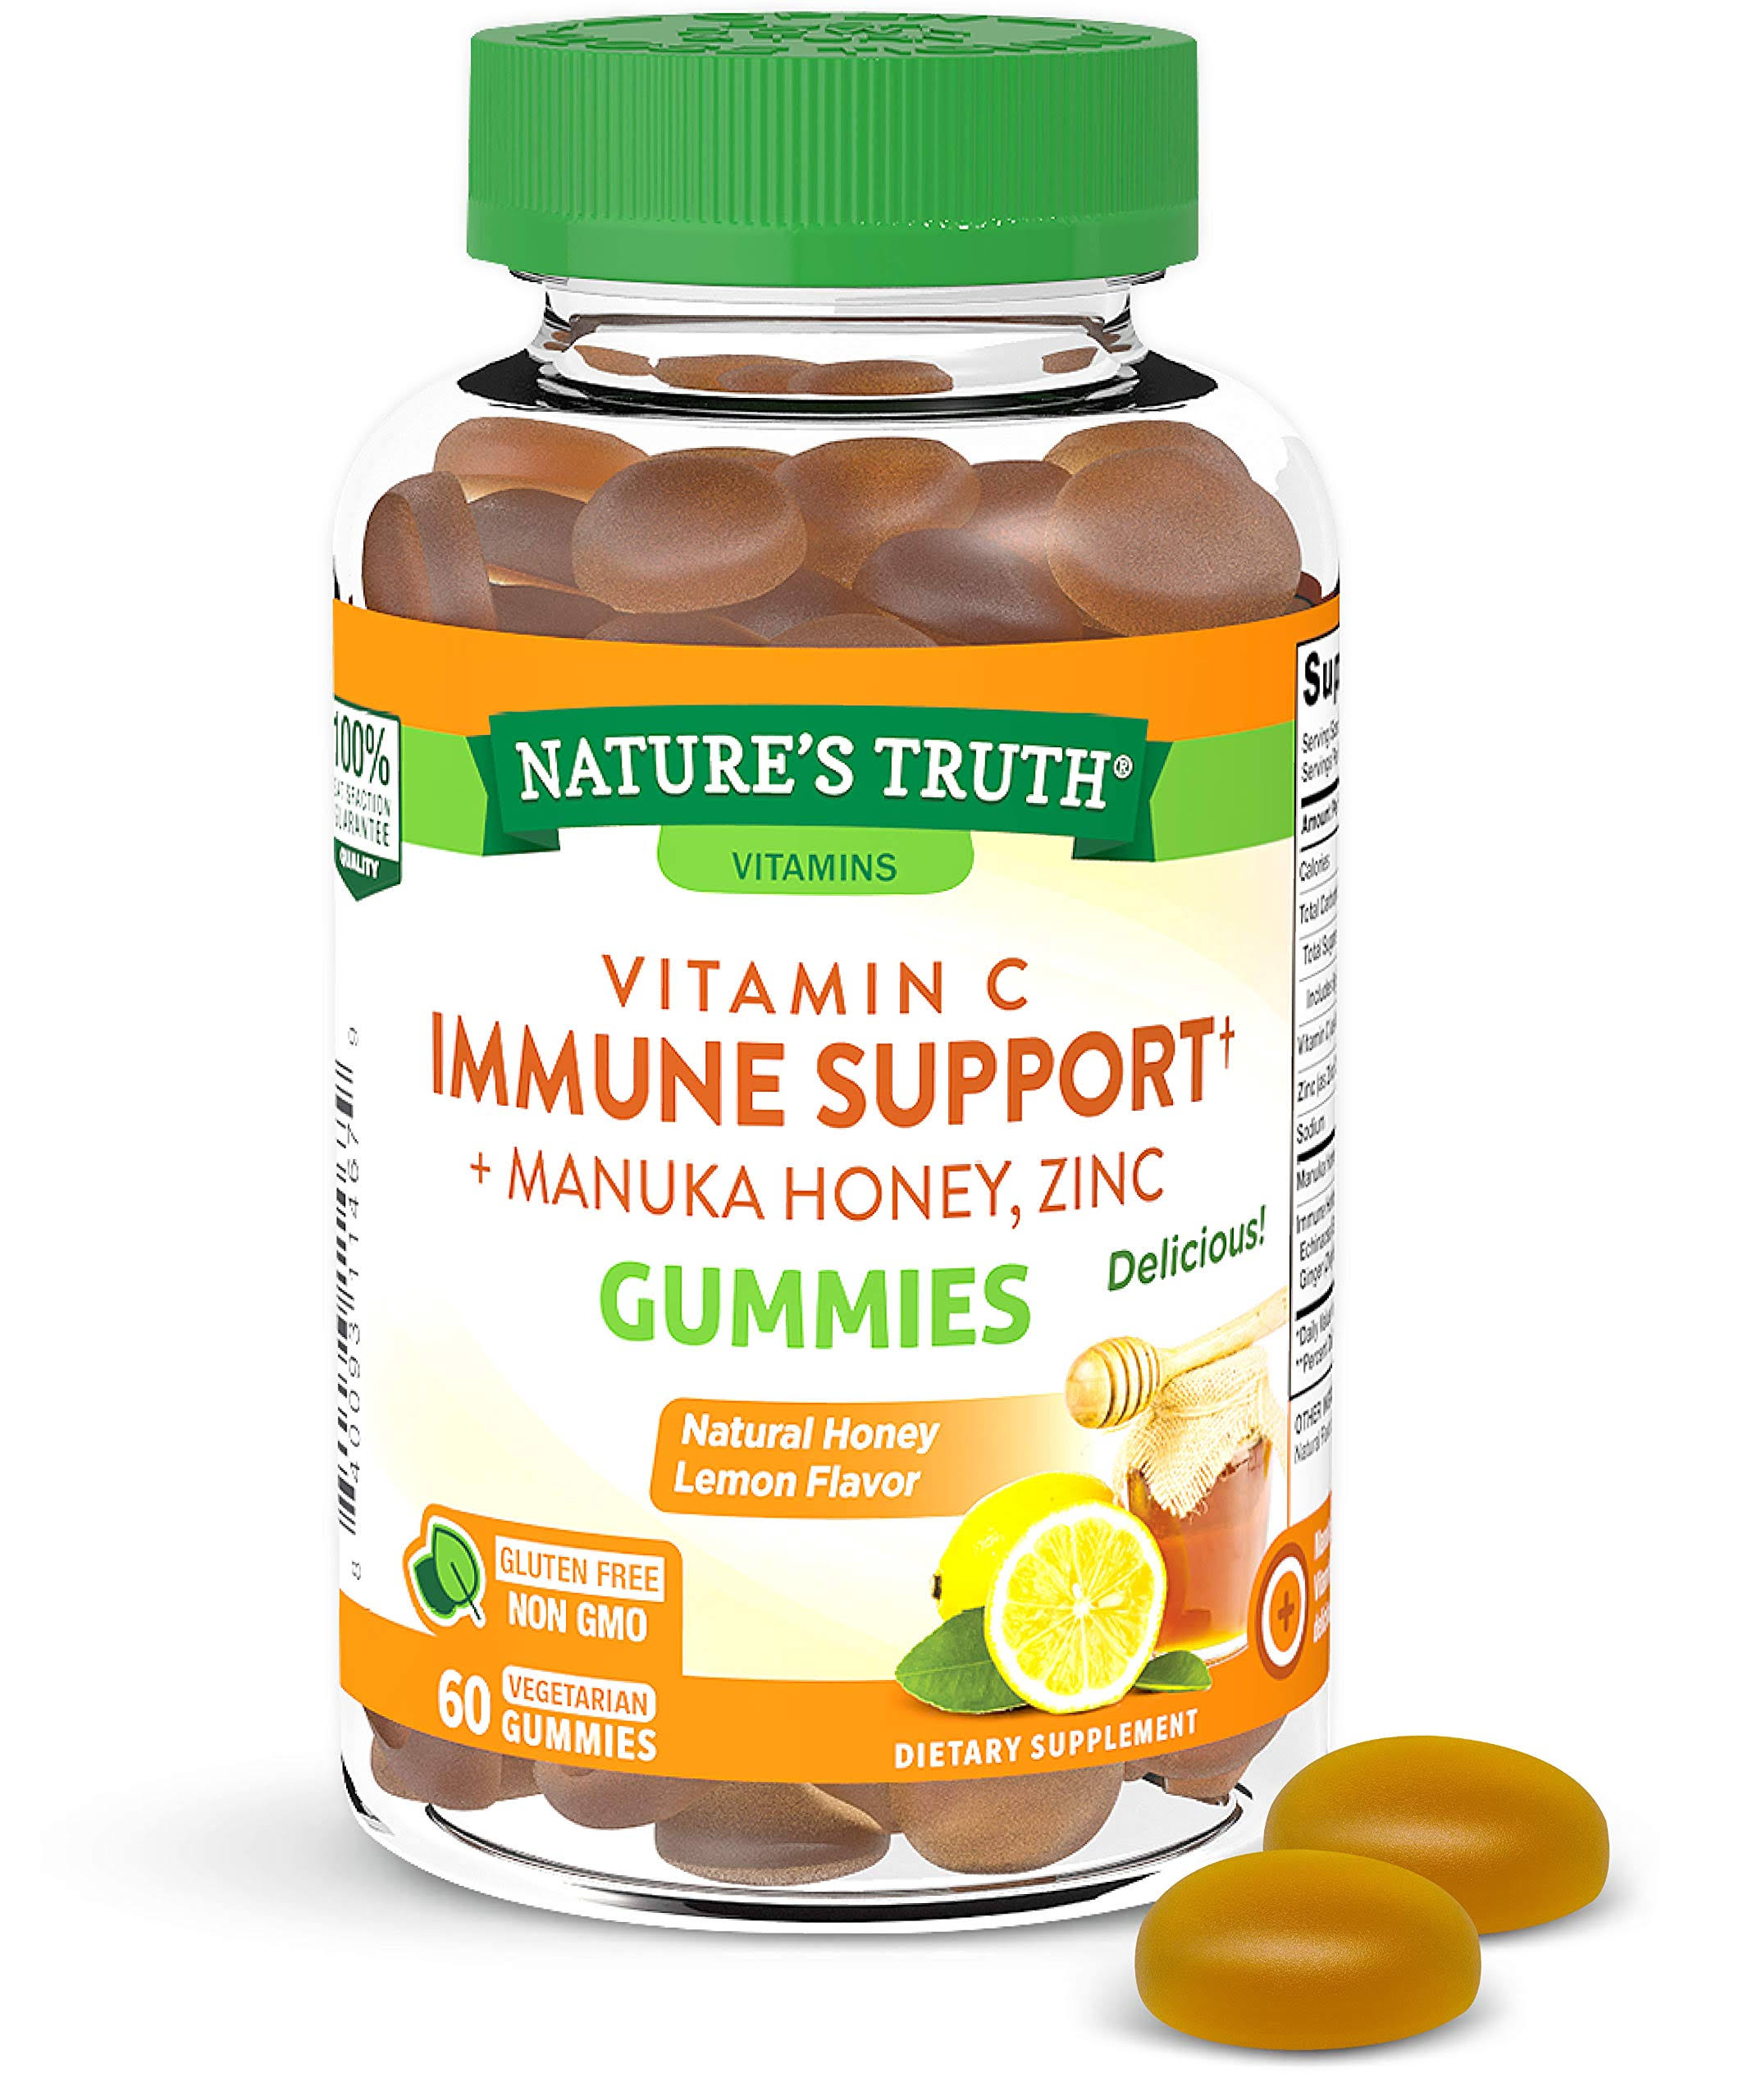 Natures Truth Vitamin C, Immune Support + Manuka Honey, Zinc, Gummies, Natural Honey Lemon - 60 gummies